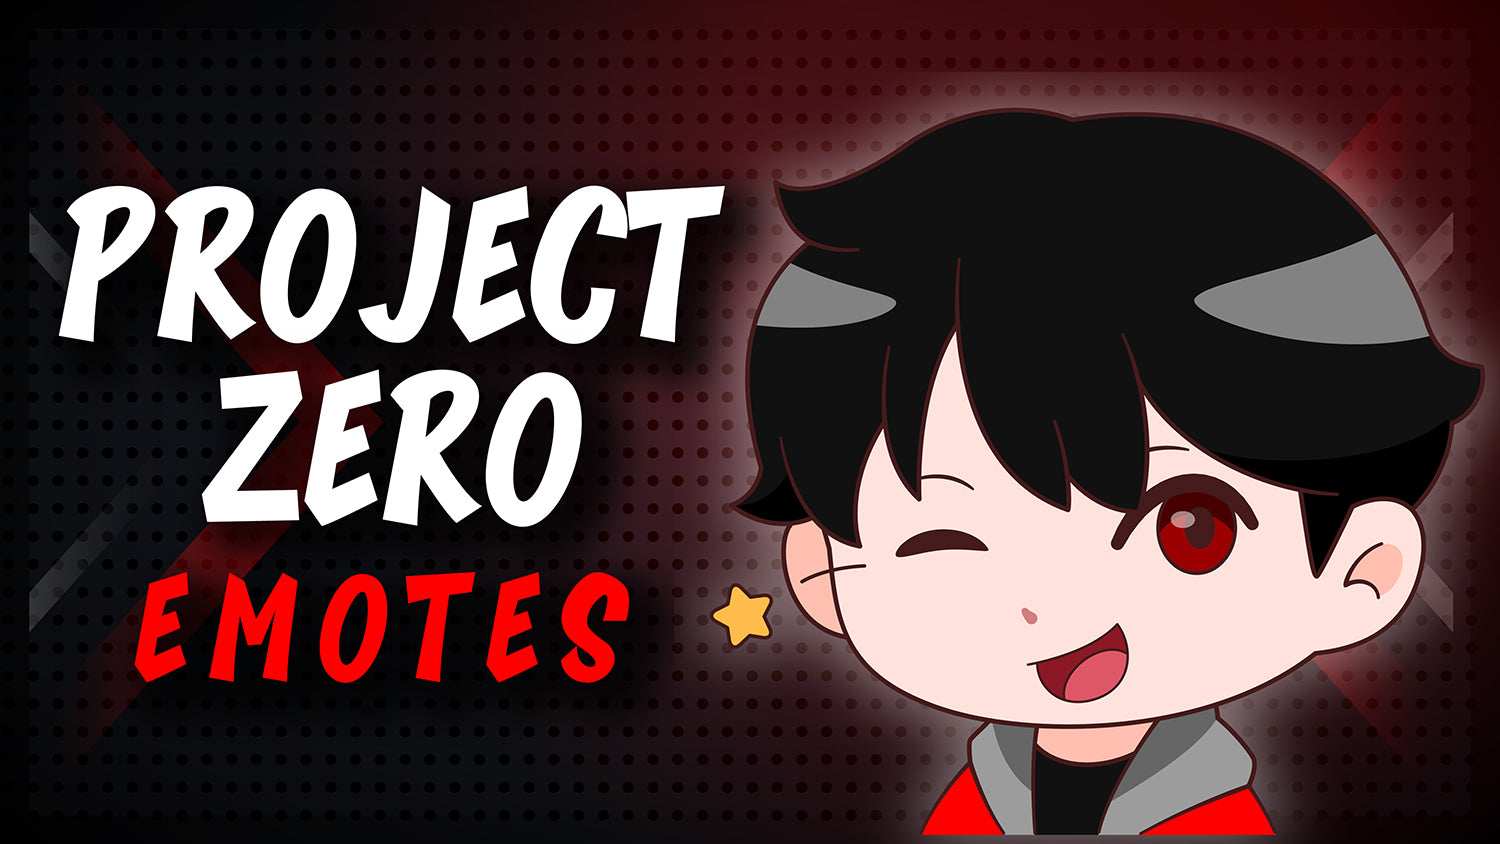 8 pack emotes project zero thumbnail stream designz